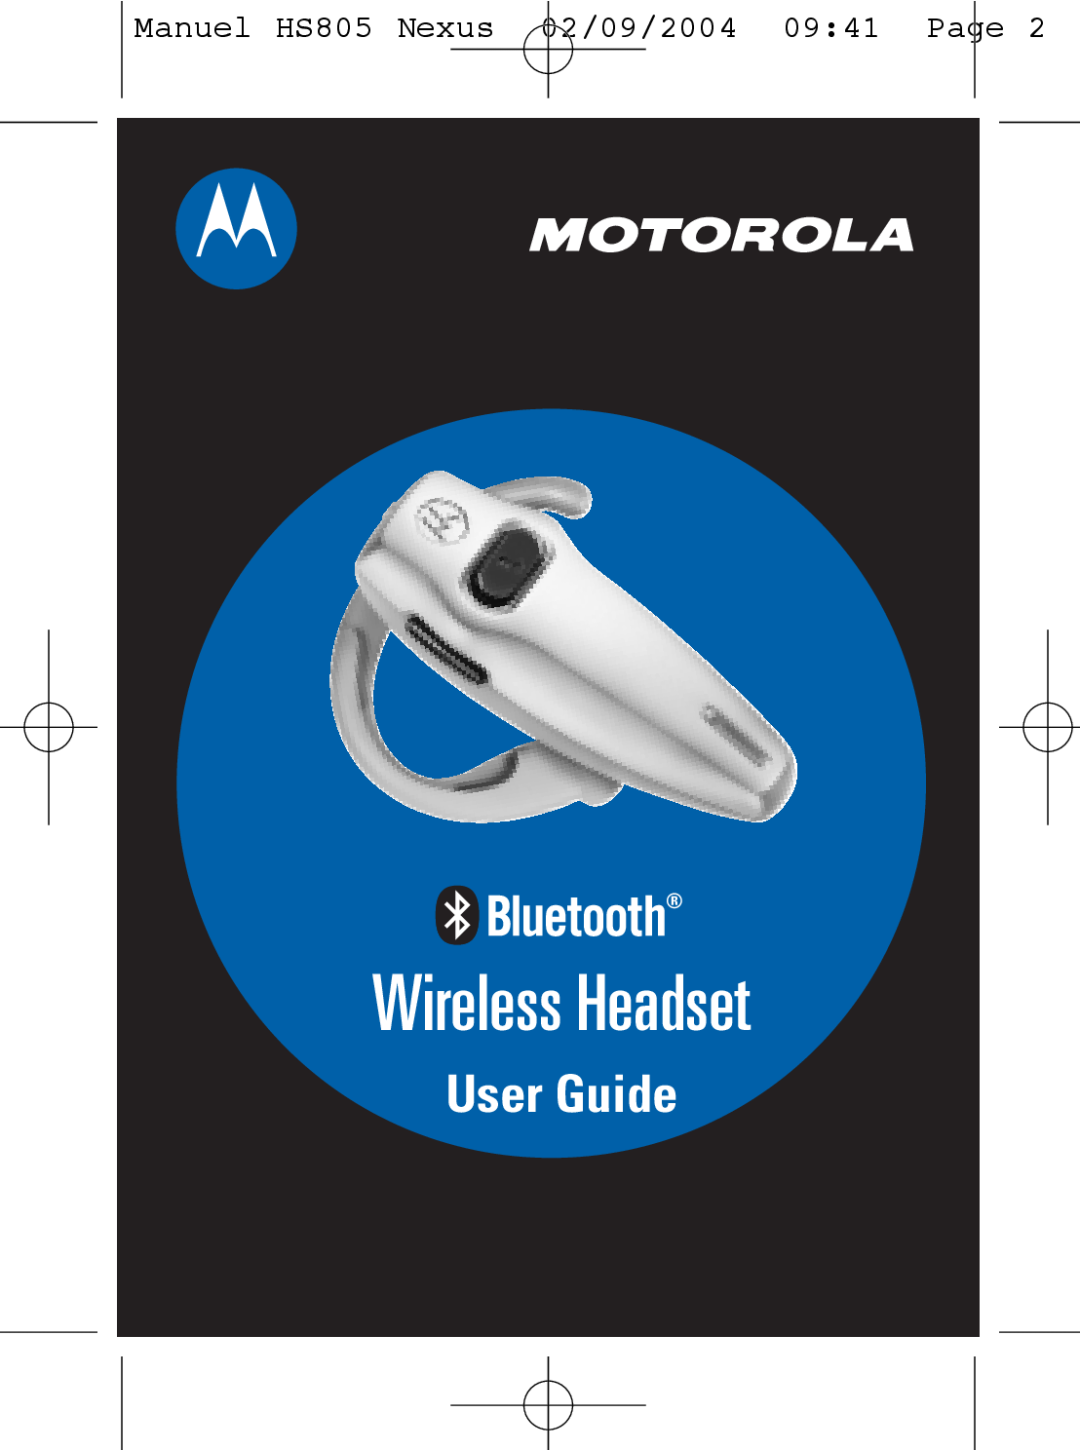 Motorola manual Manuel HS805 Nexus 02/09/2004 09 41 Page, Wireless Headset, User Guide 